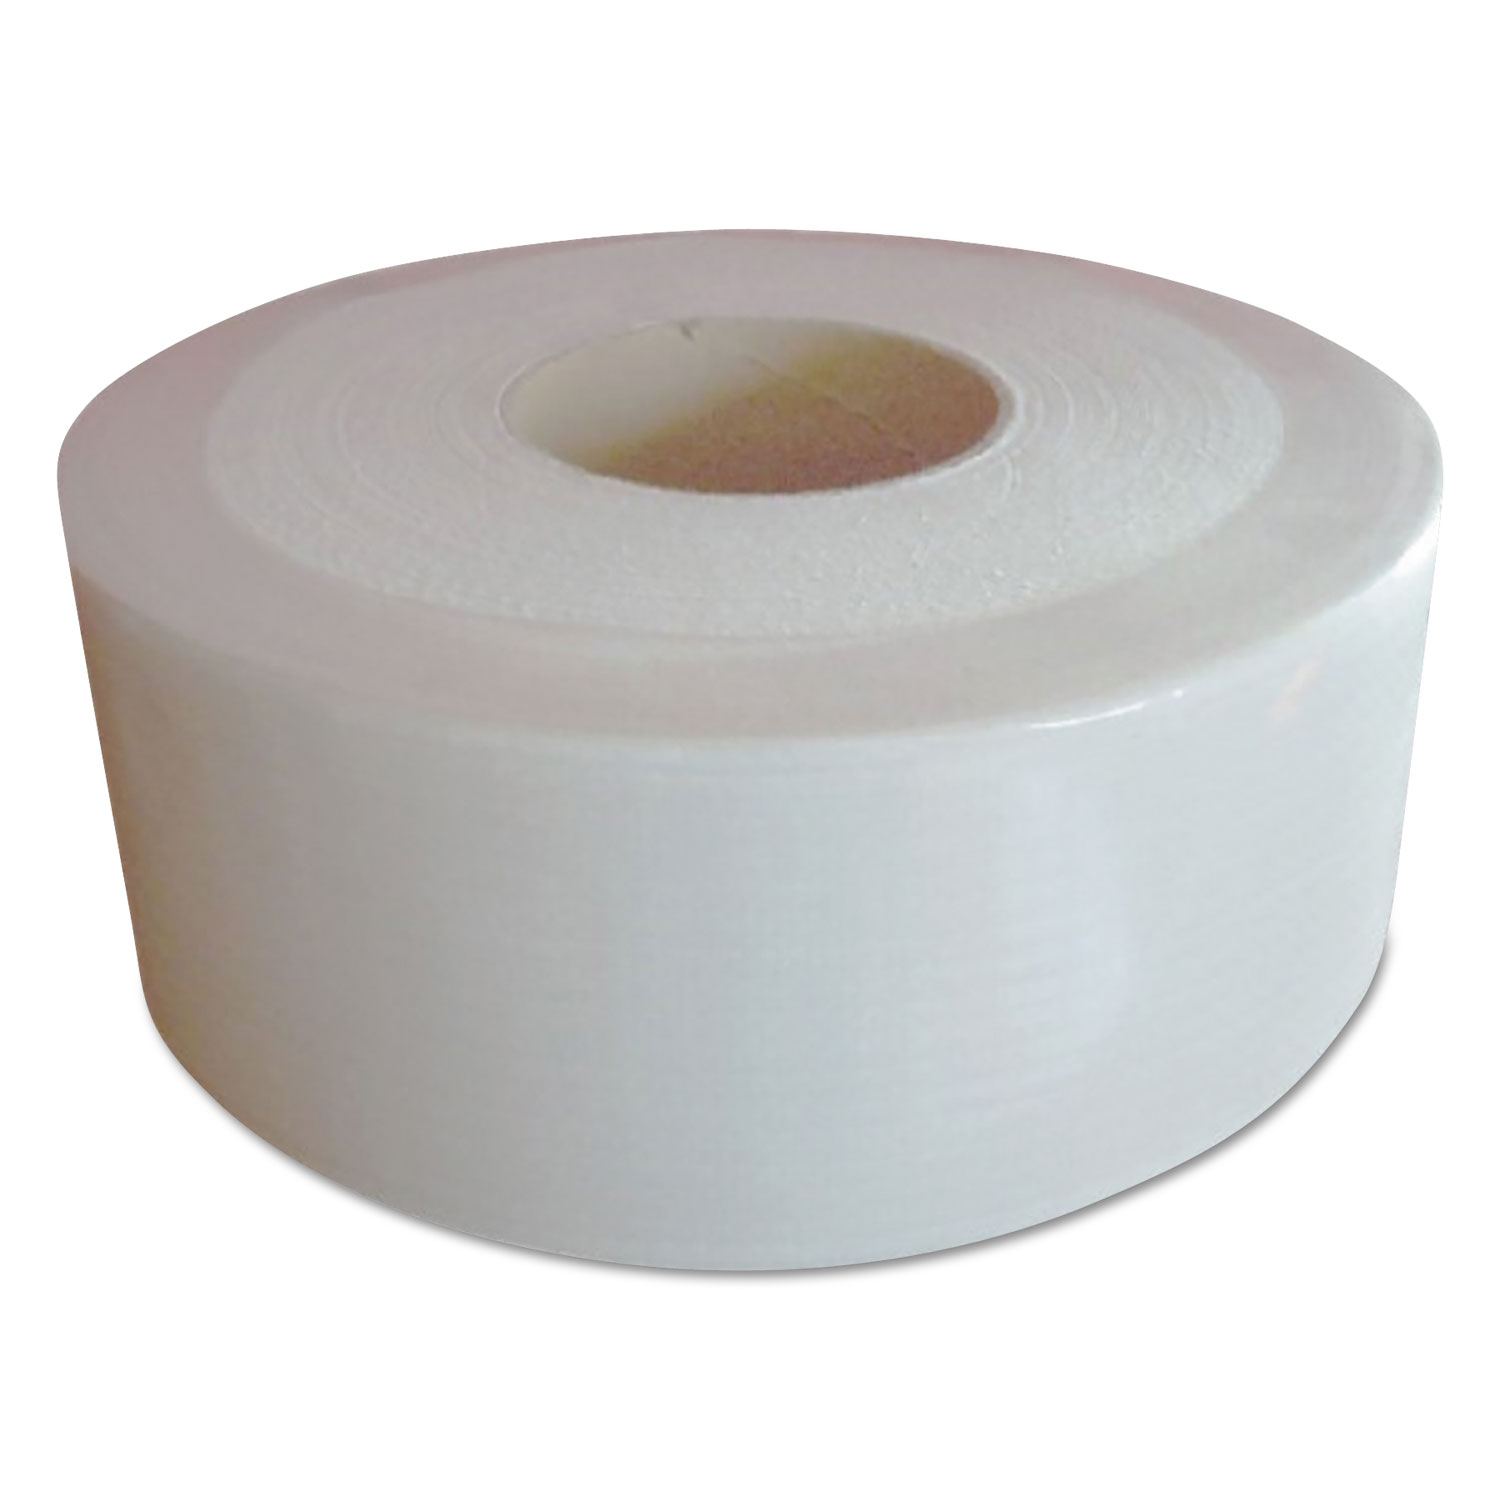  Boardwalk BWKJRT1000 Jumbo Roll Tissue, Septic Safe, 2-Ply, Natural, 3.3 x 1000 ft, 12 Roll/Carton (BWKJRT1000) 